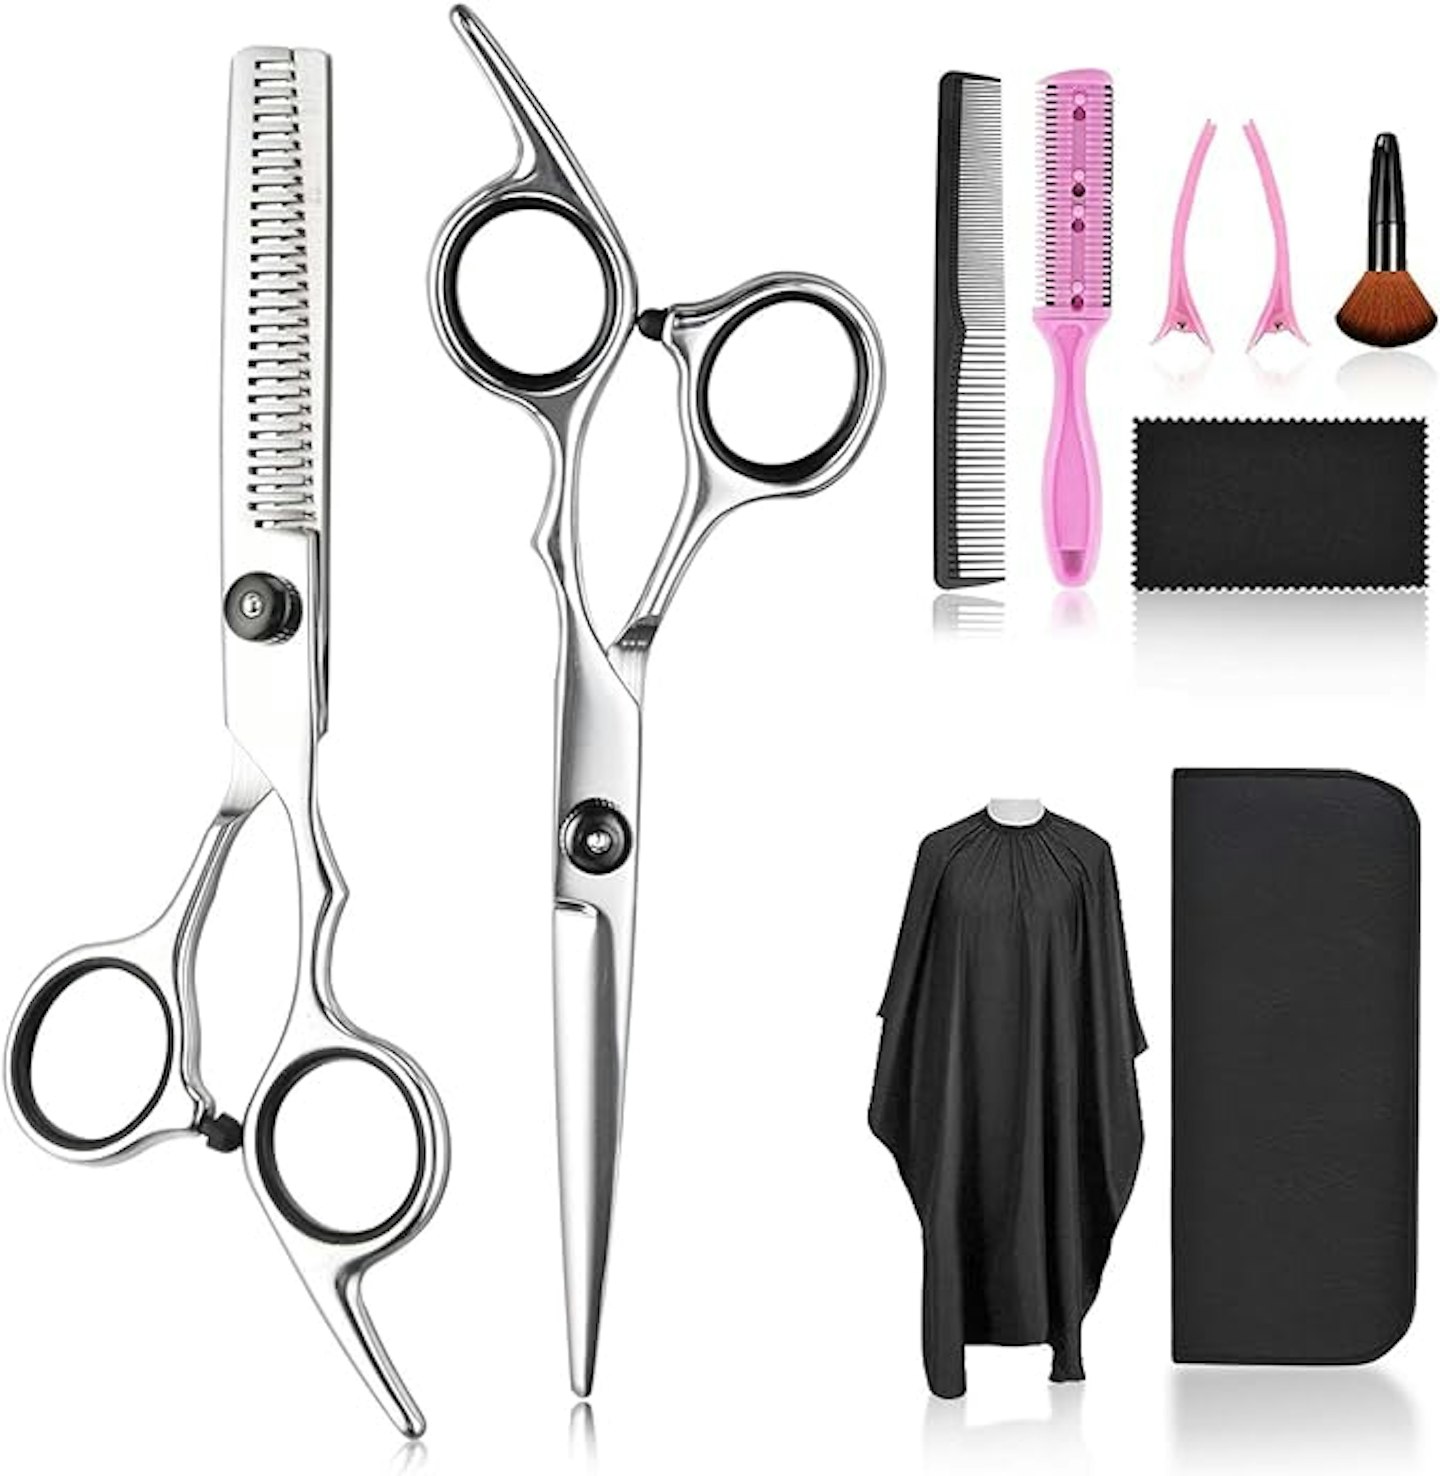 Fcysy 10pcs Professional Hair Cutting Scissors Set